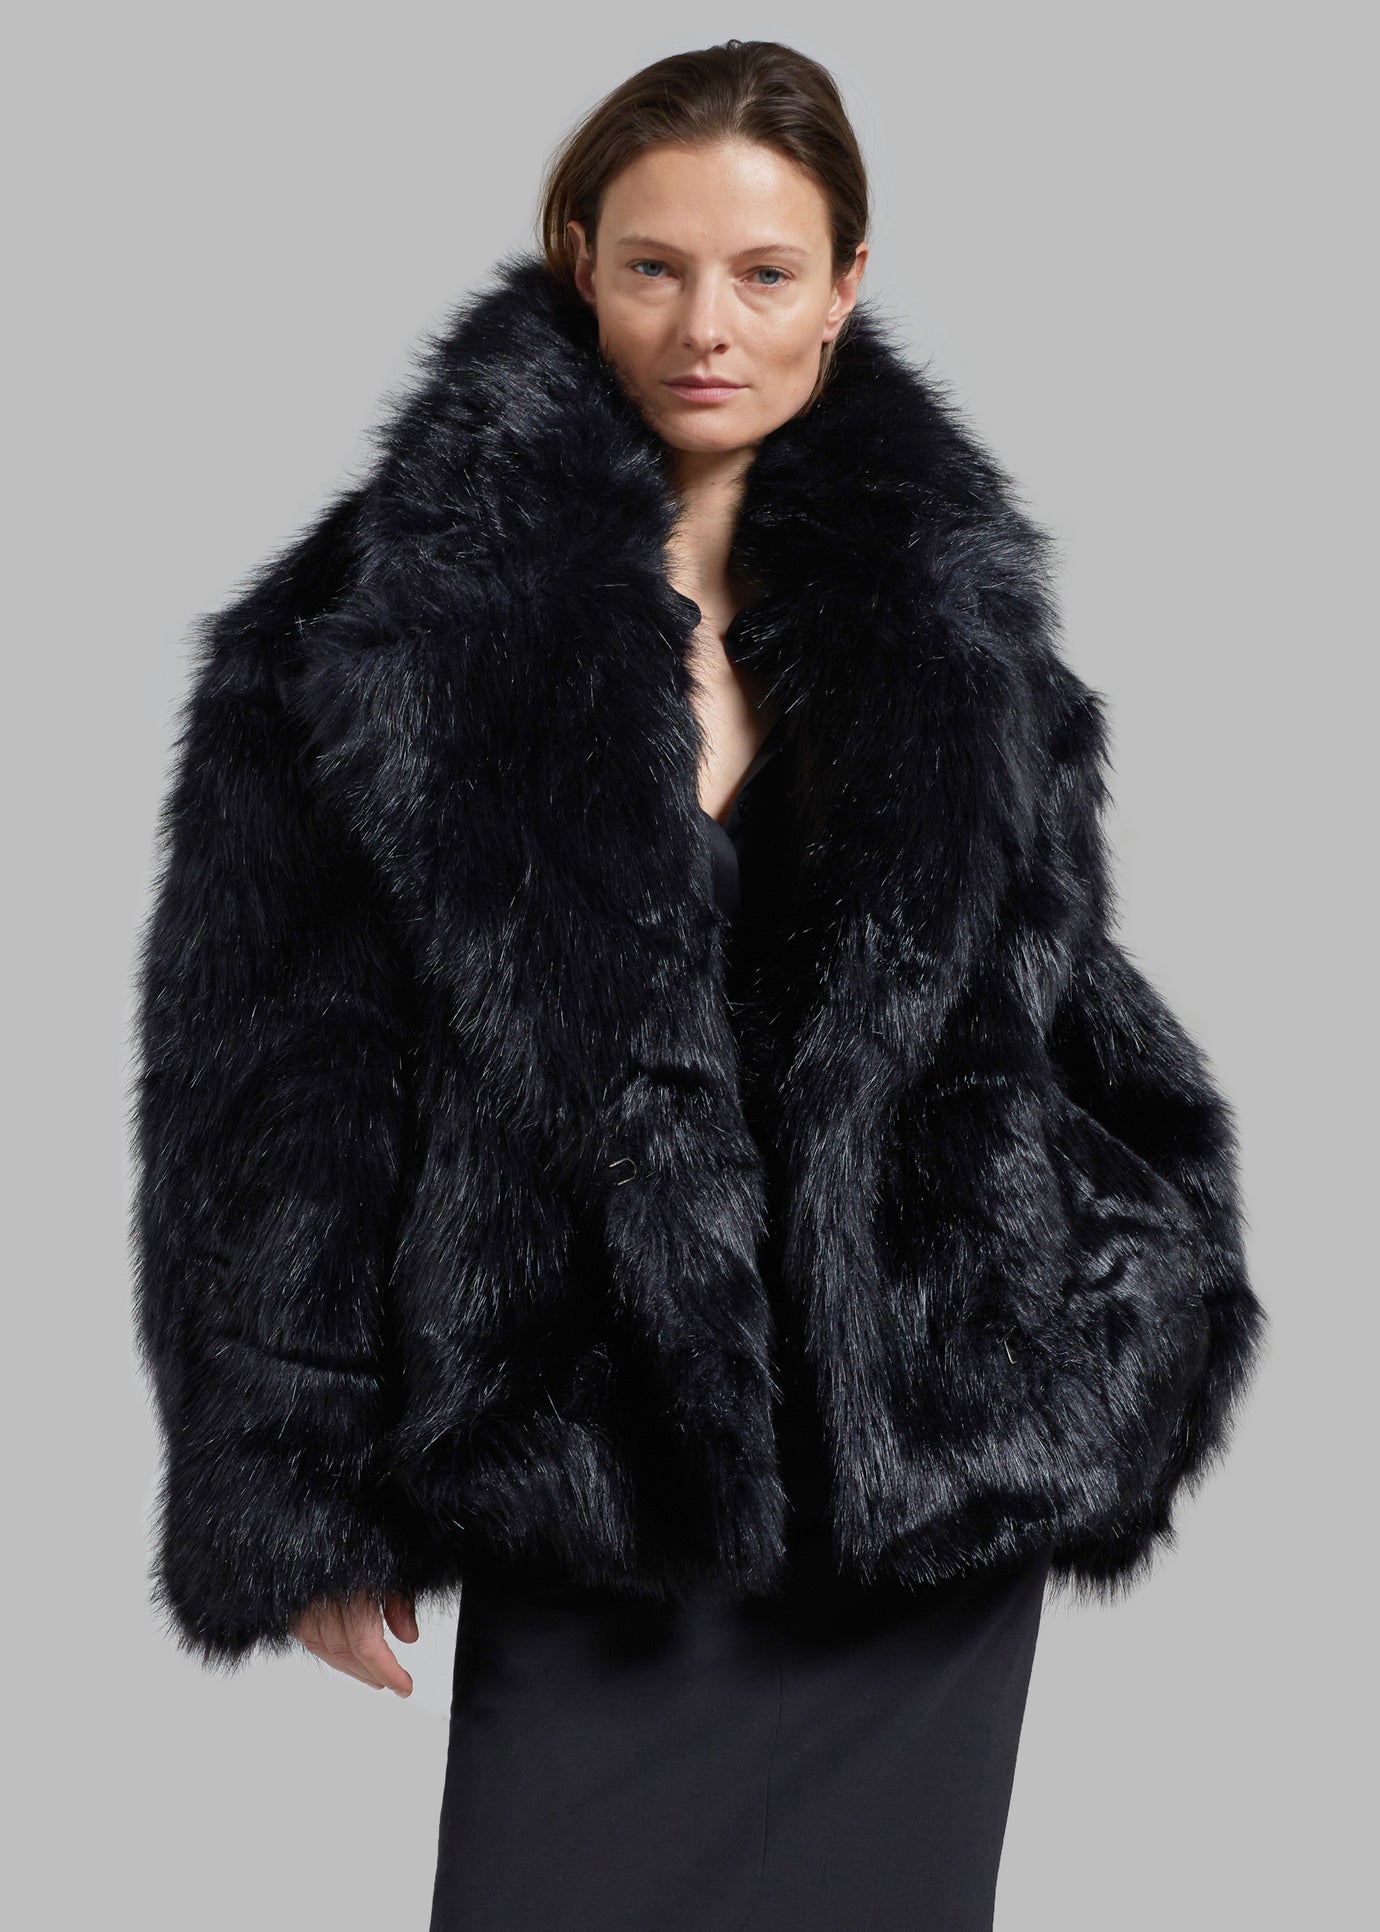 Fallon Short Faux Fur Coat - Black - 1